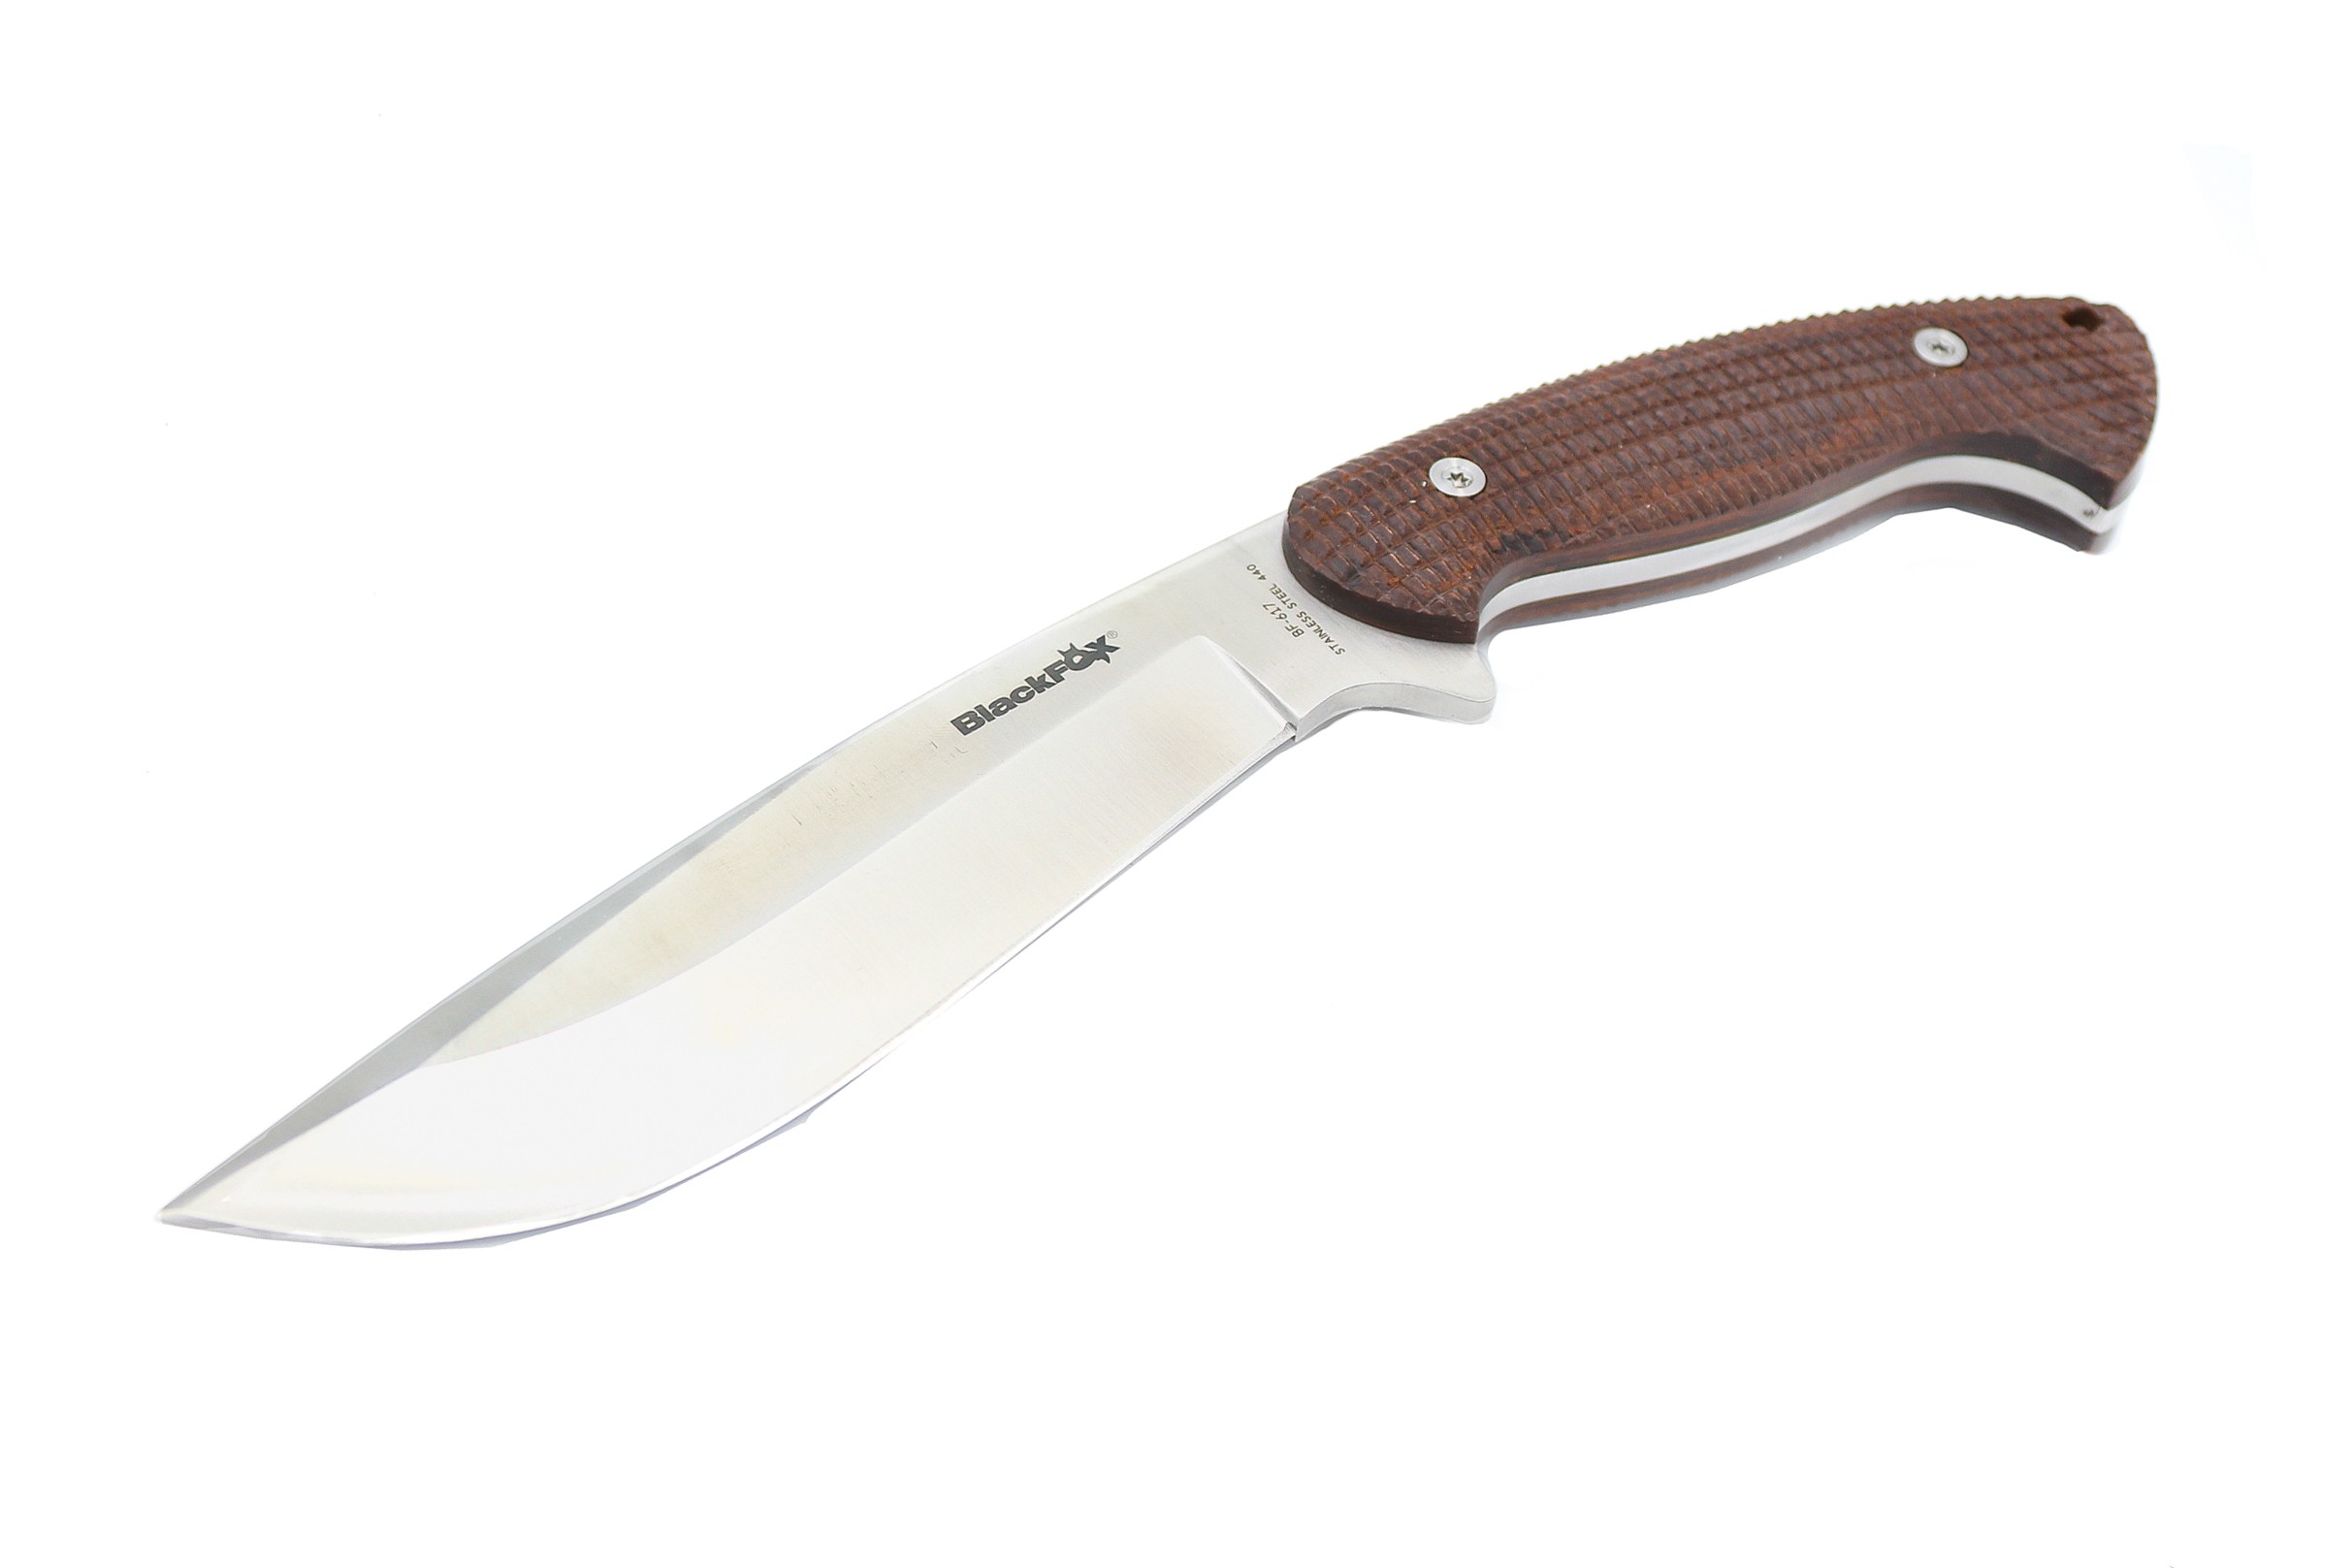 Нож Fox Black фикс. клинок 14.5 см сталь 440A - фото 1